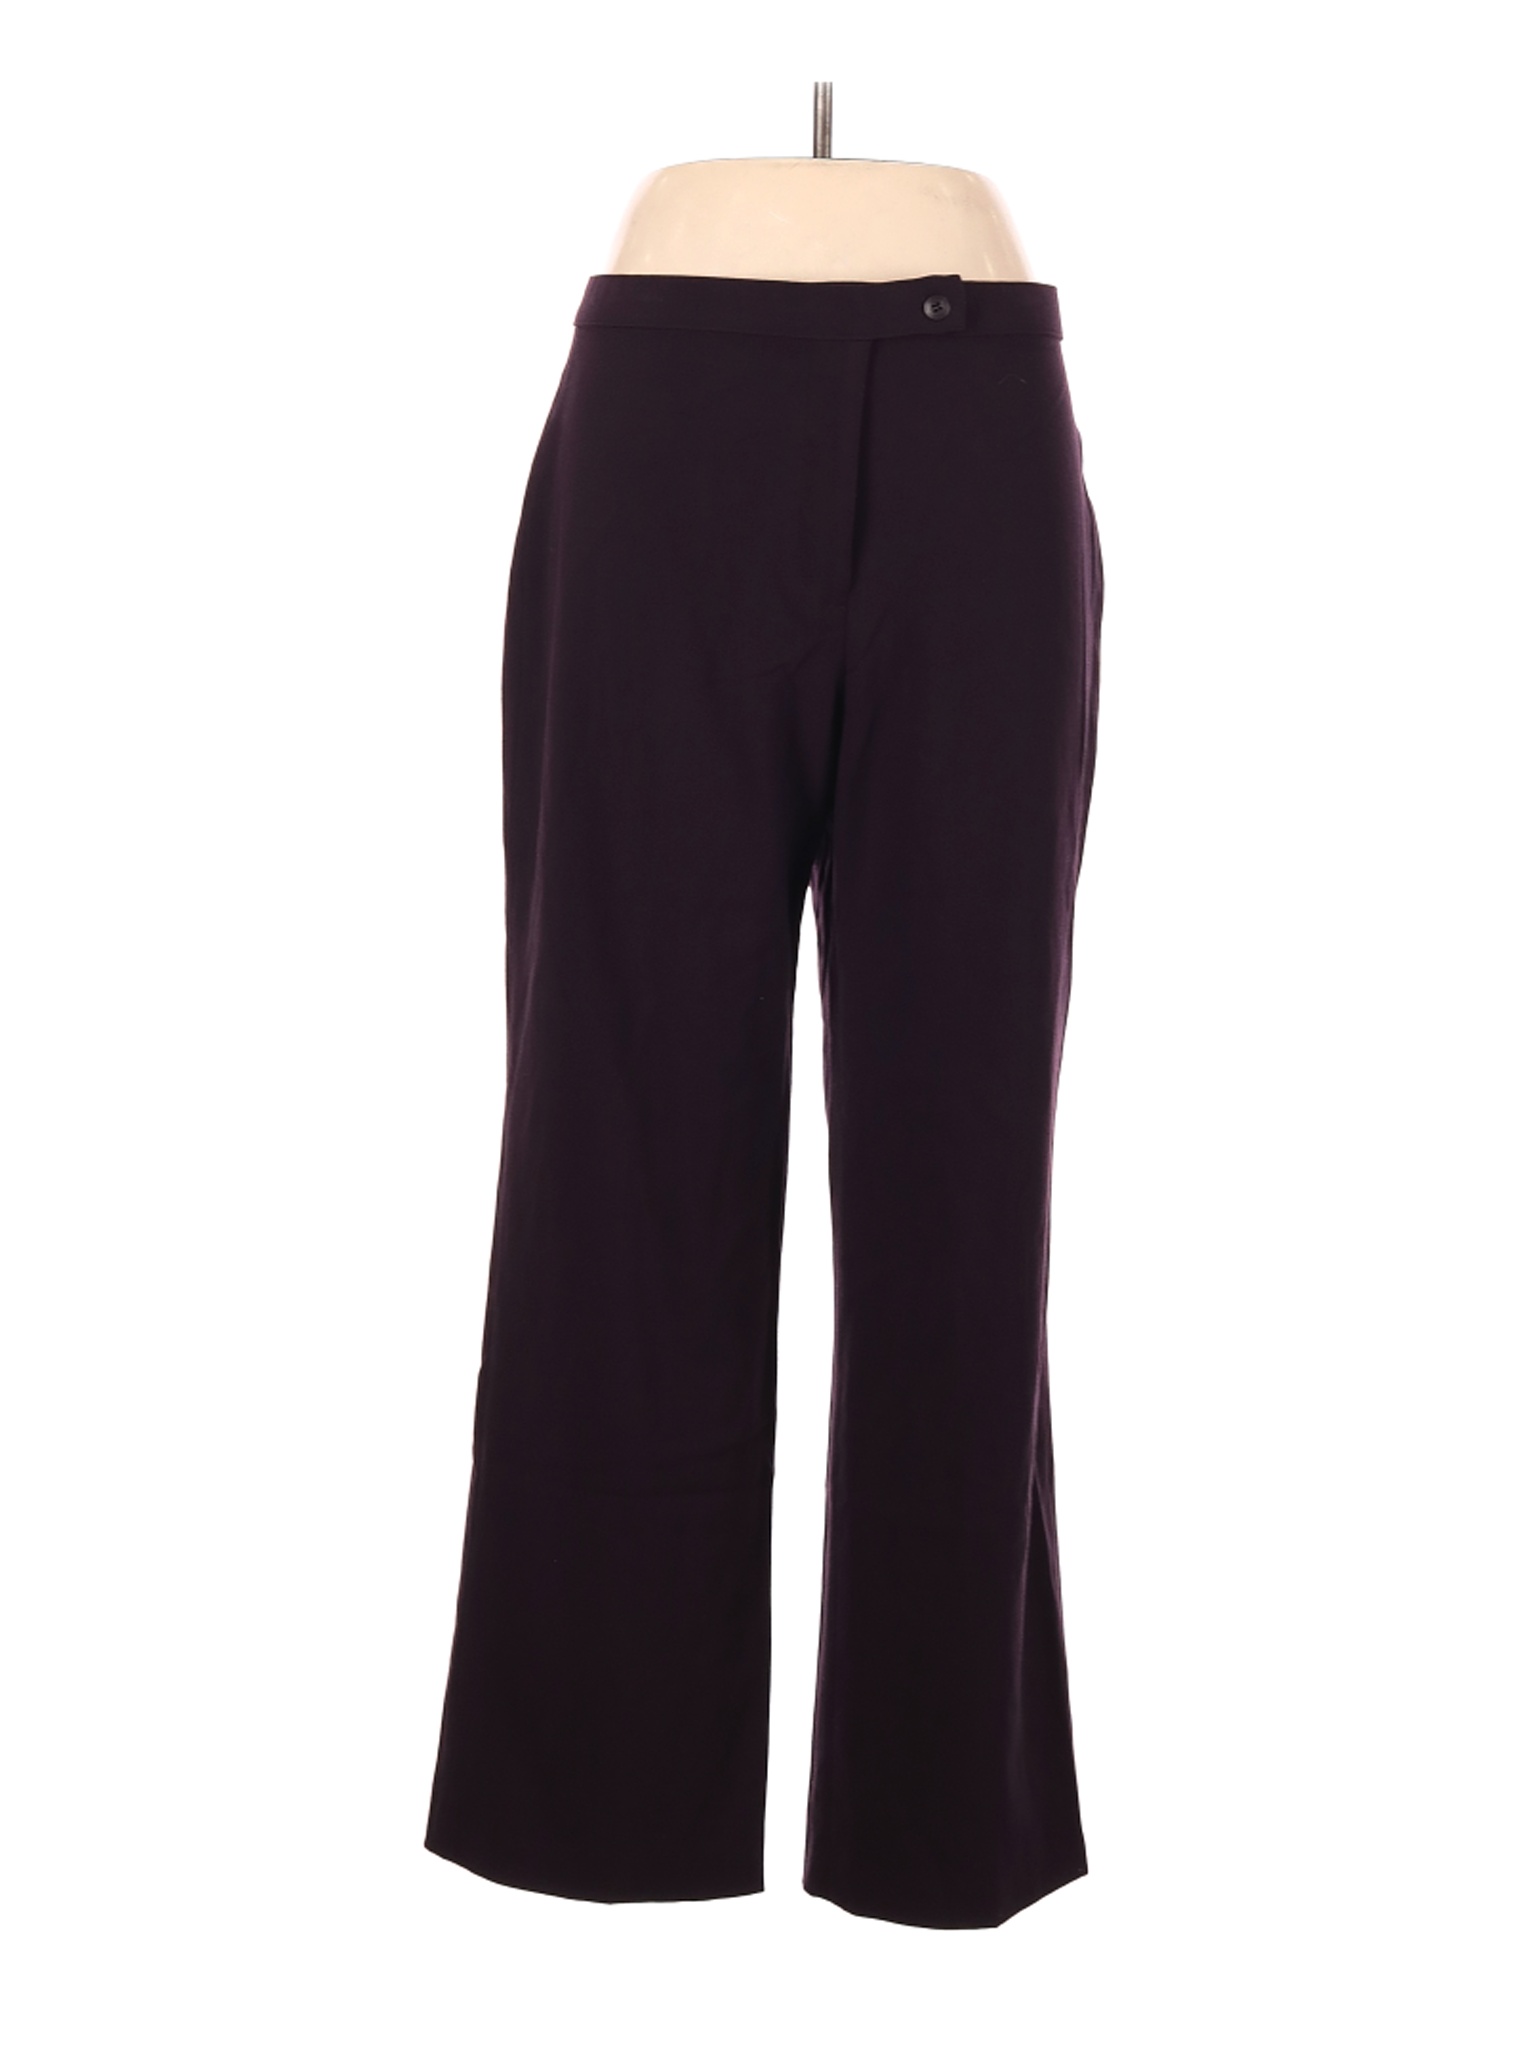 Haggar Women Purple Dress Pants 12 | eBay